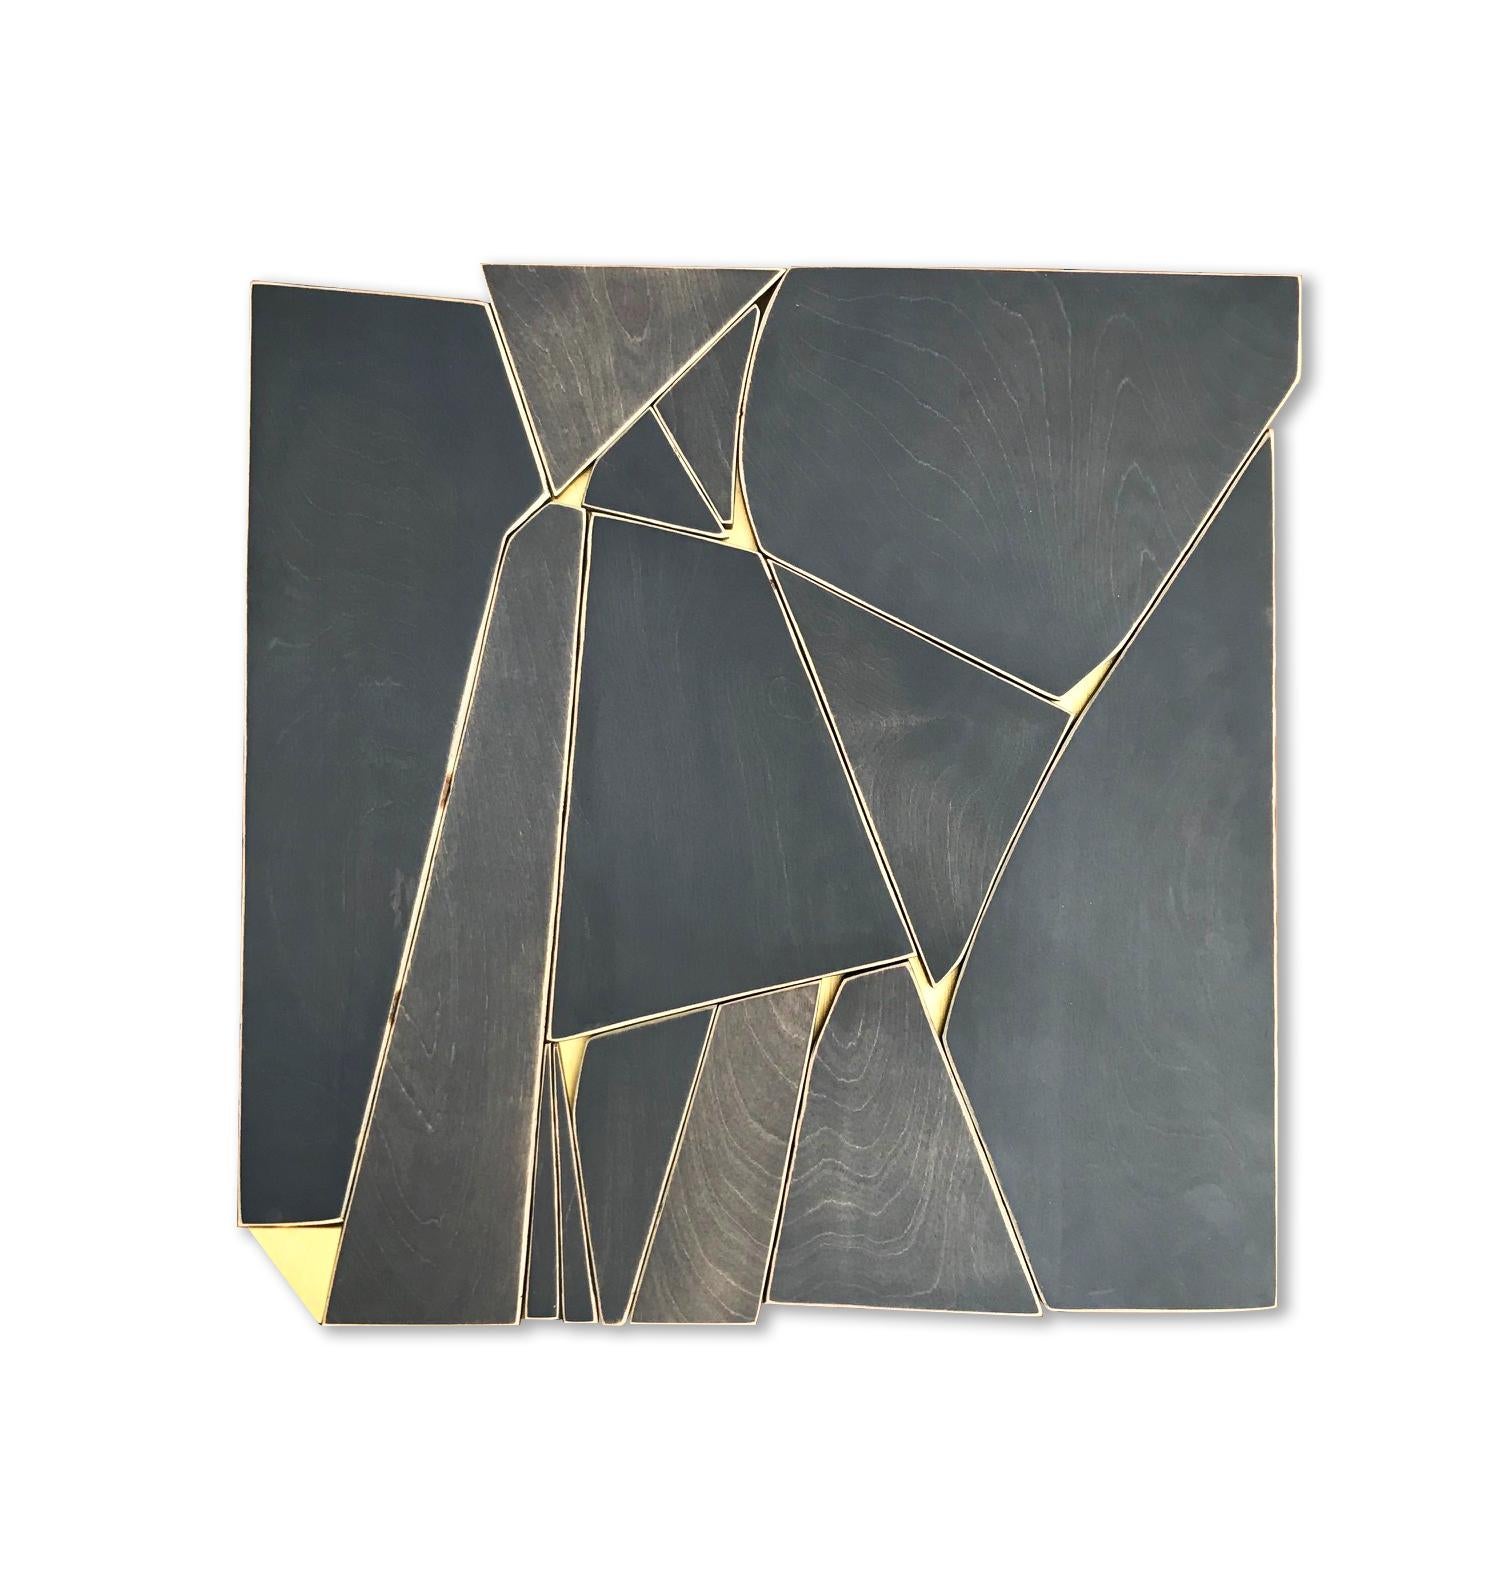 Monochrome Holz-Wandskulptur „Outlier“ – hellbraun, gold, schwarz, elegant, modern – Mixed Media Art von Scott Troxel